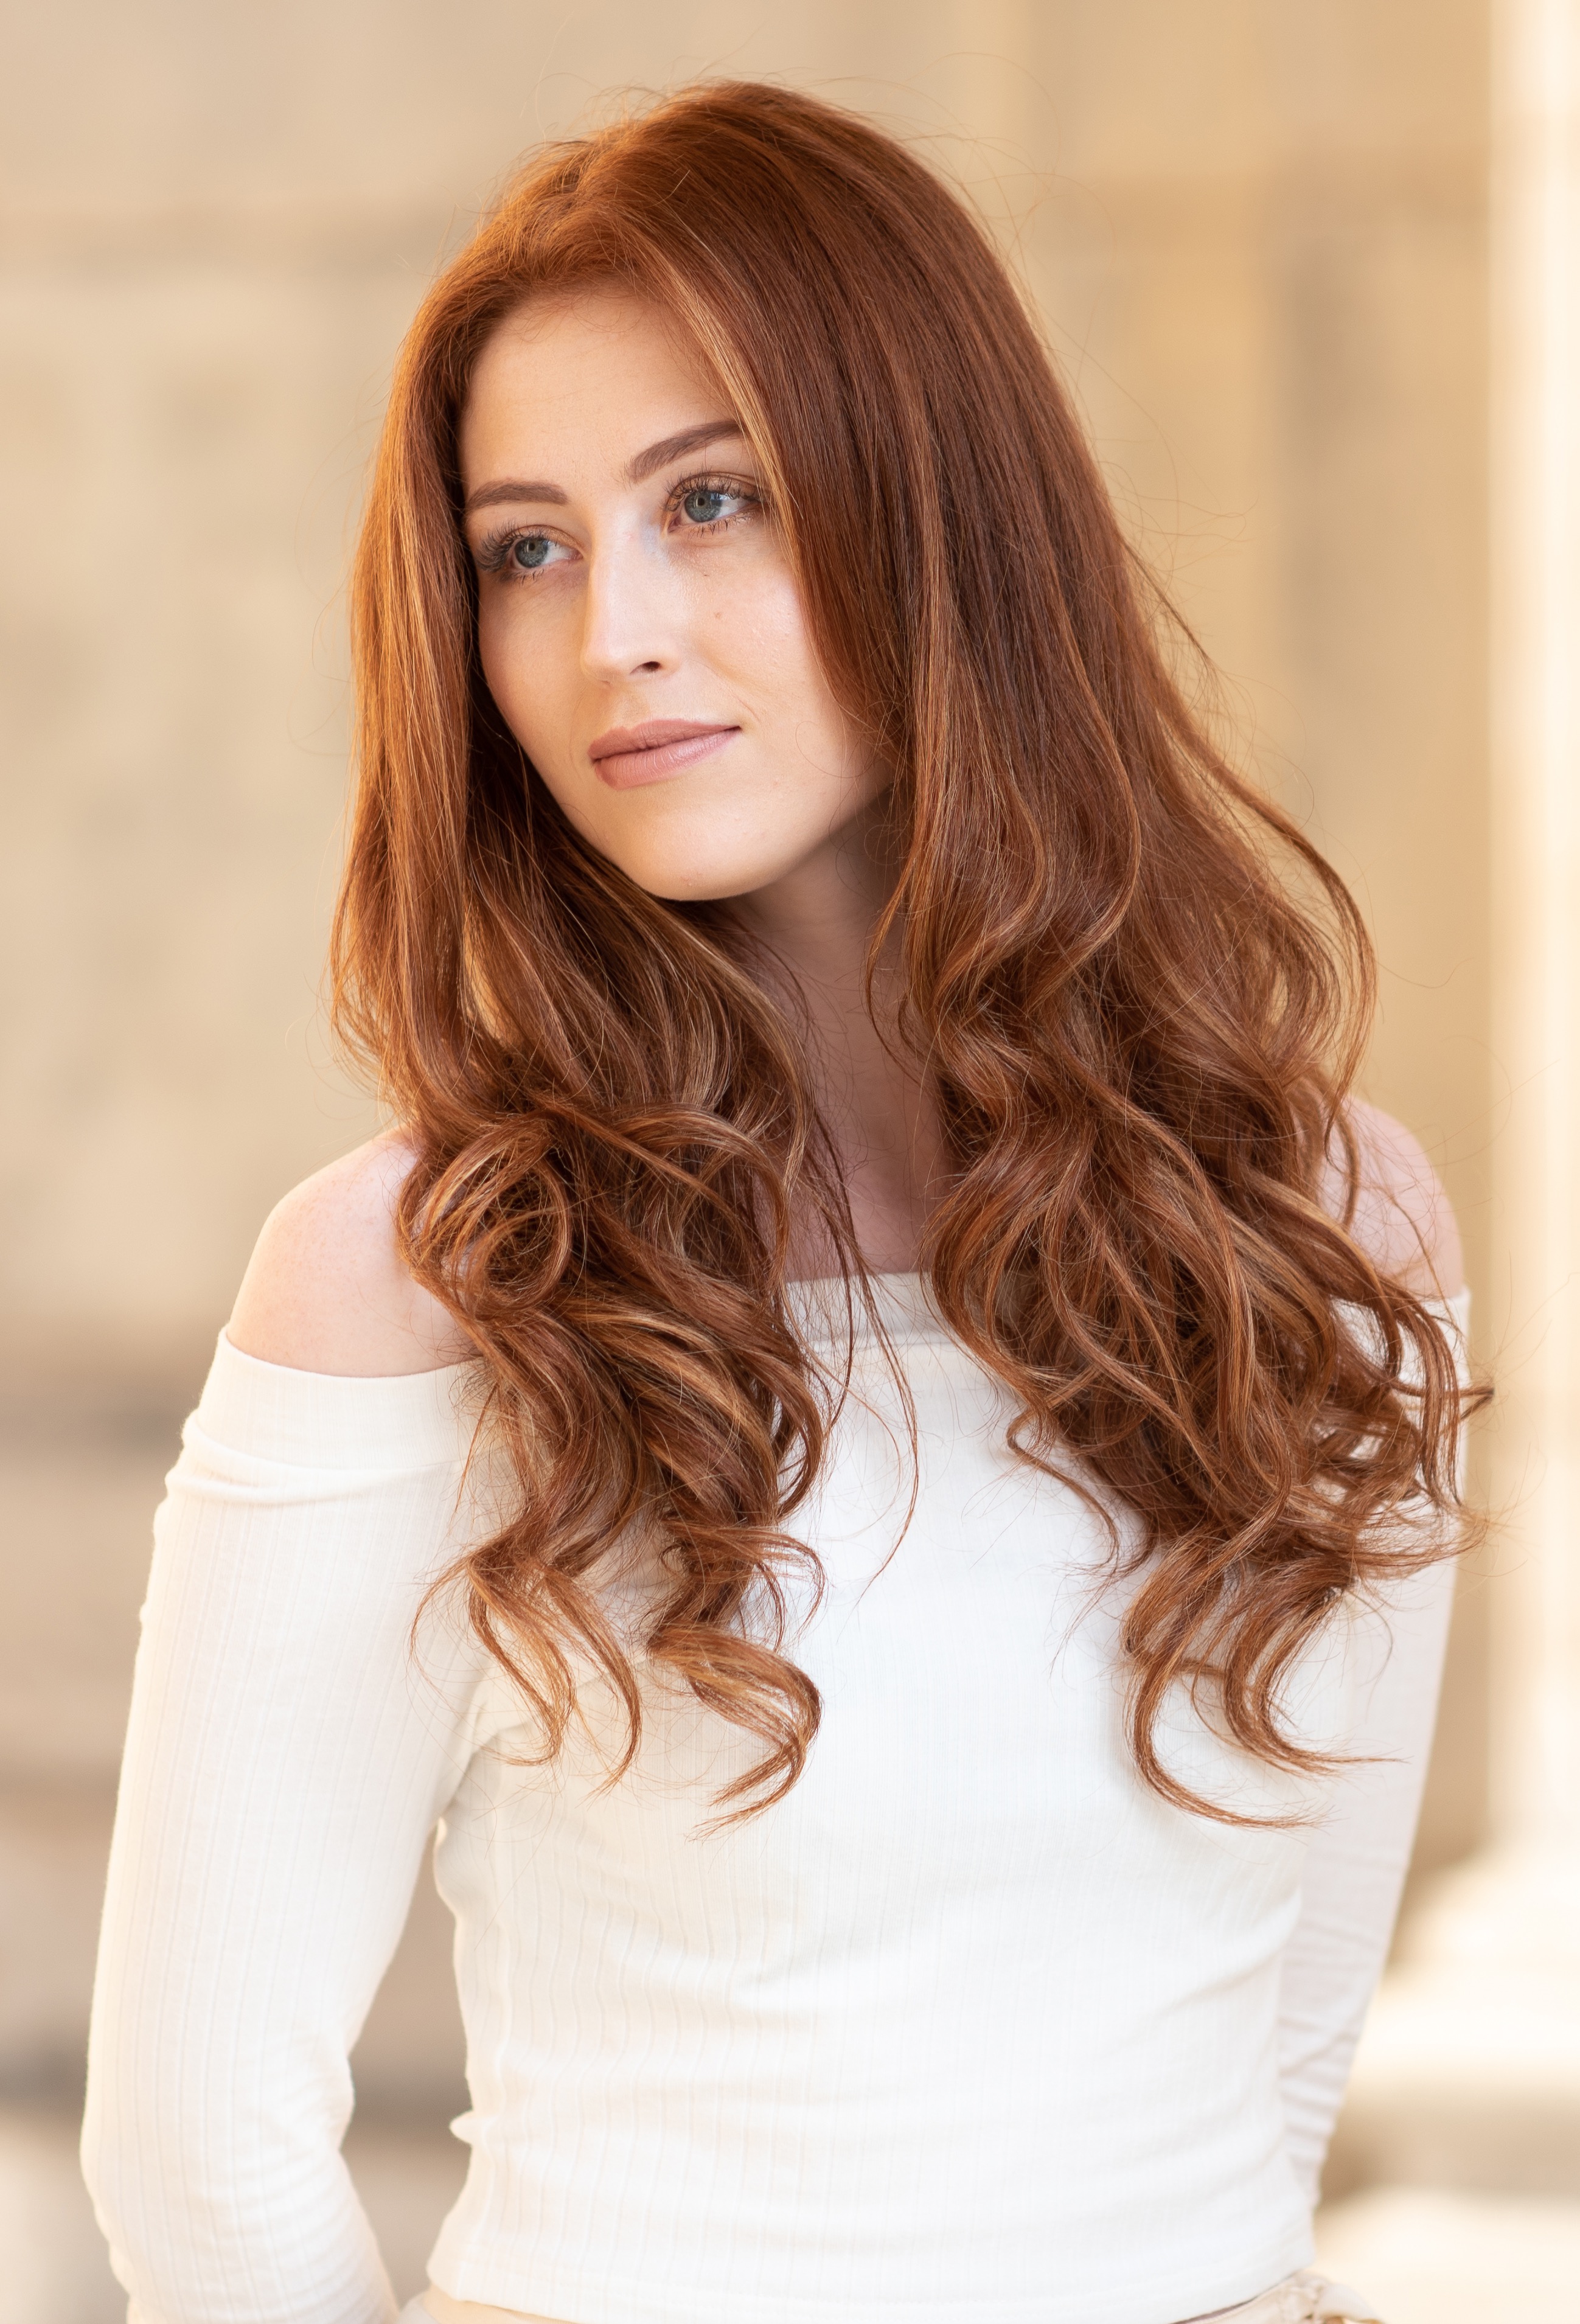 Web-Shine-Female-Model-Amy-Red-Hair-London-002.jpg#asset:47923